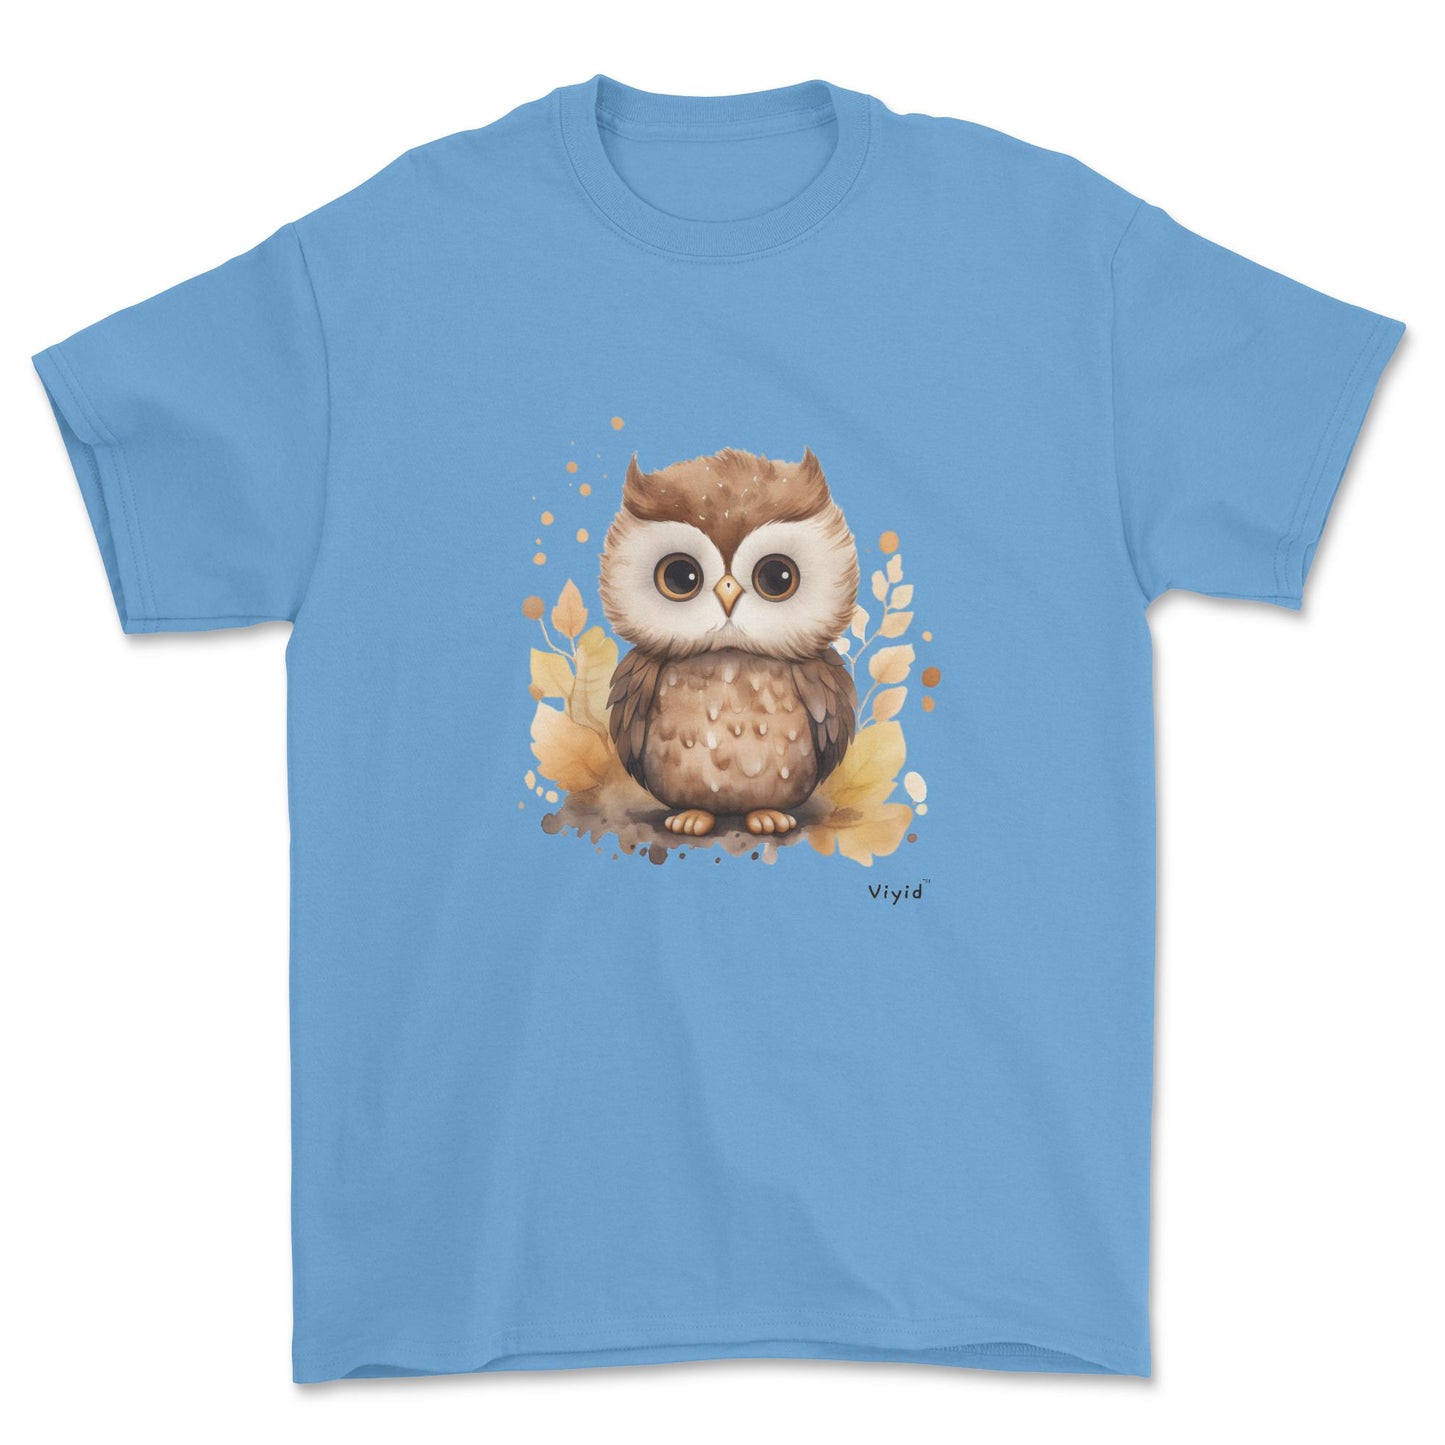 nocturnal owl adult t-shirt carolina blue